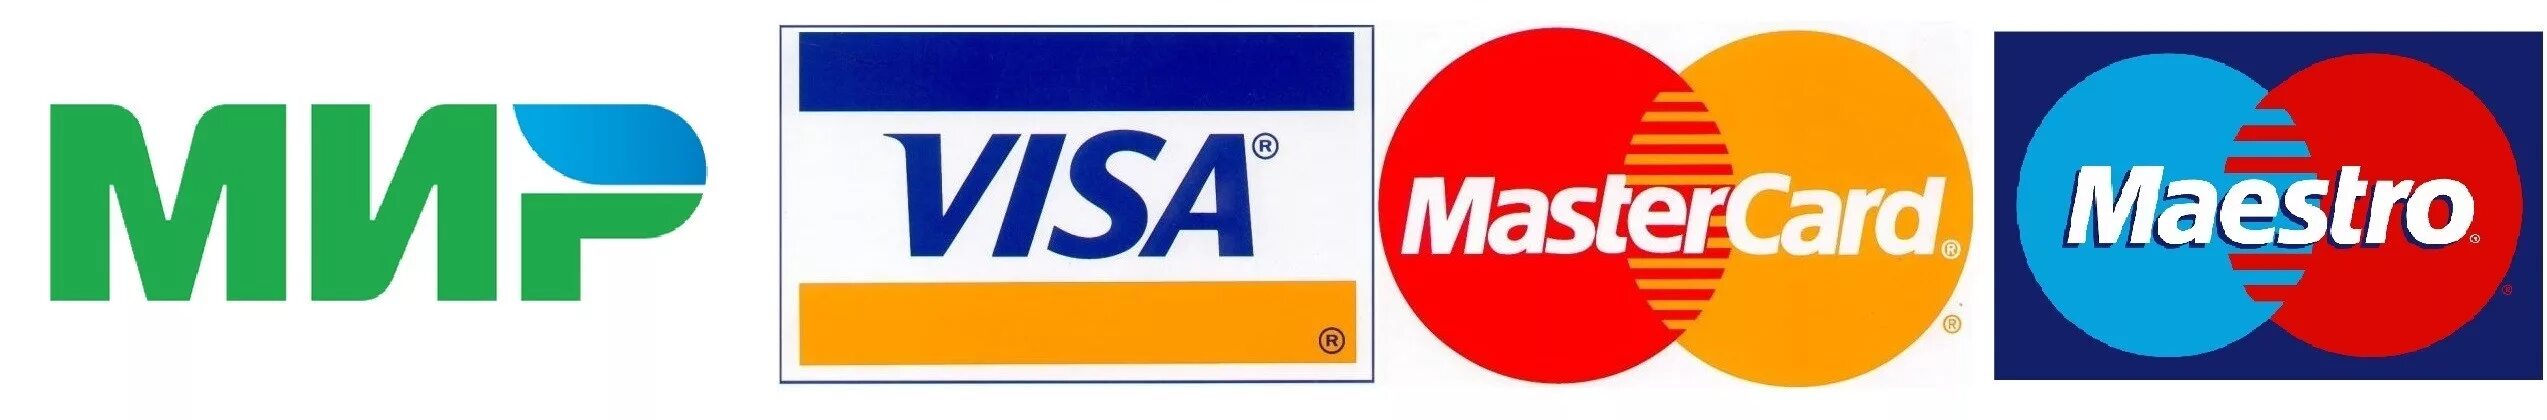 Оплата visa mastercard. Значок оплаты банковскими картами. Логотипы кредитных карт. Логотипы платежных систем. Карты виза и Мастеркард.